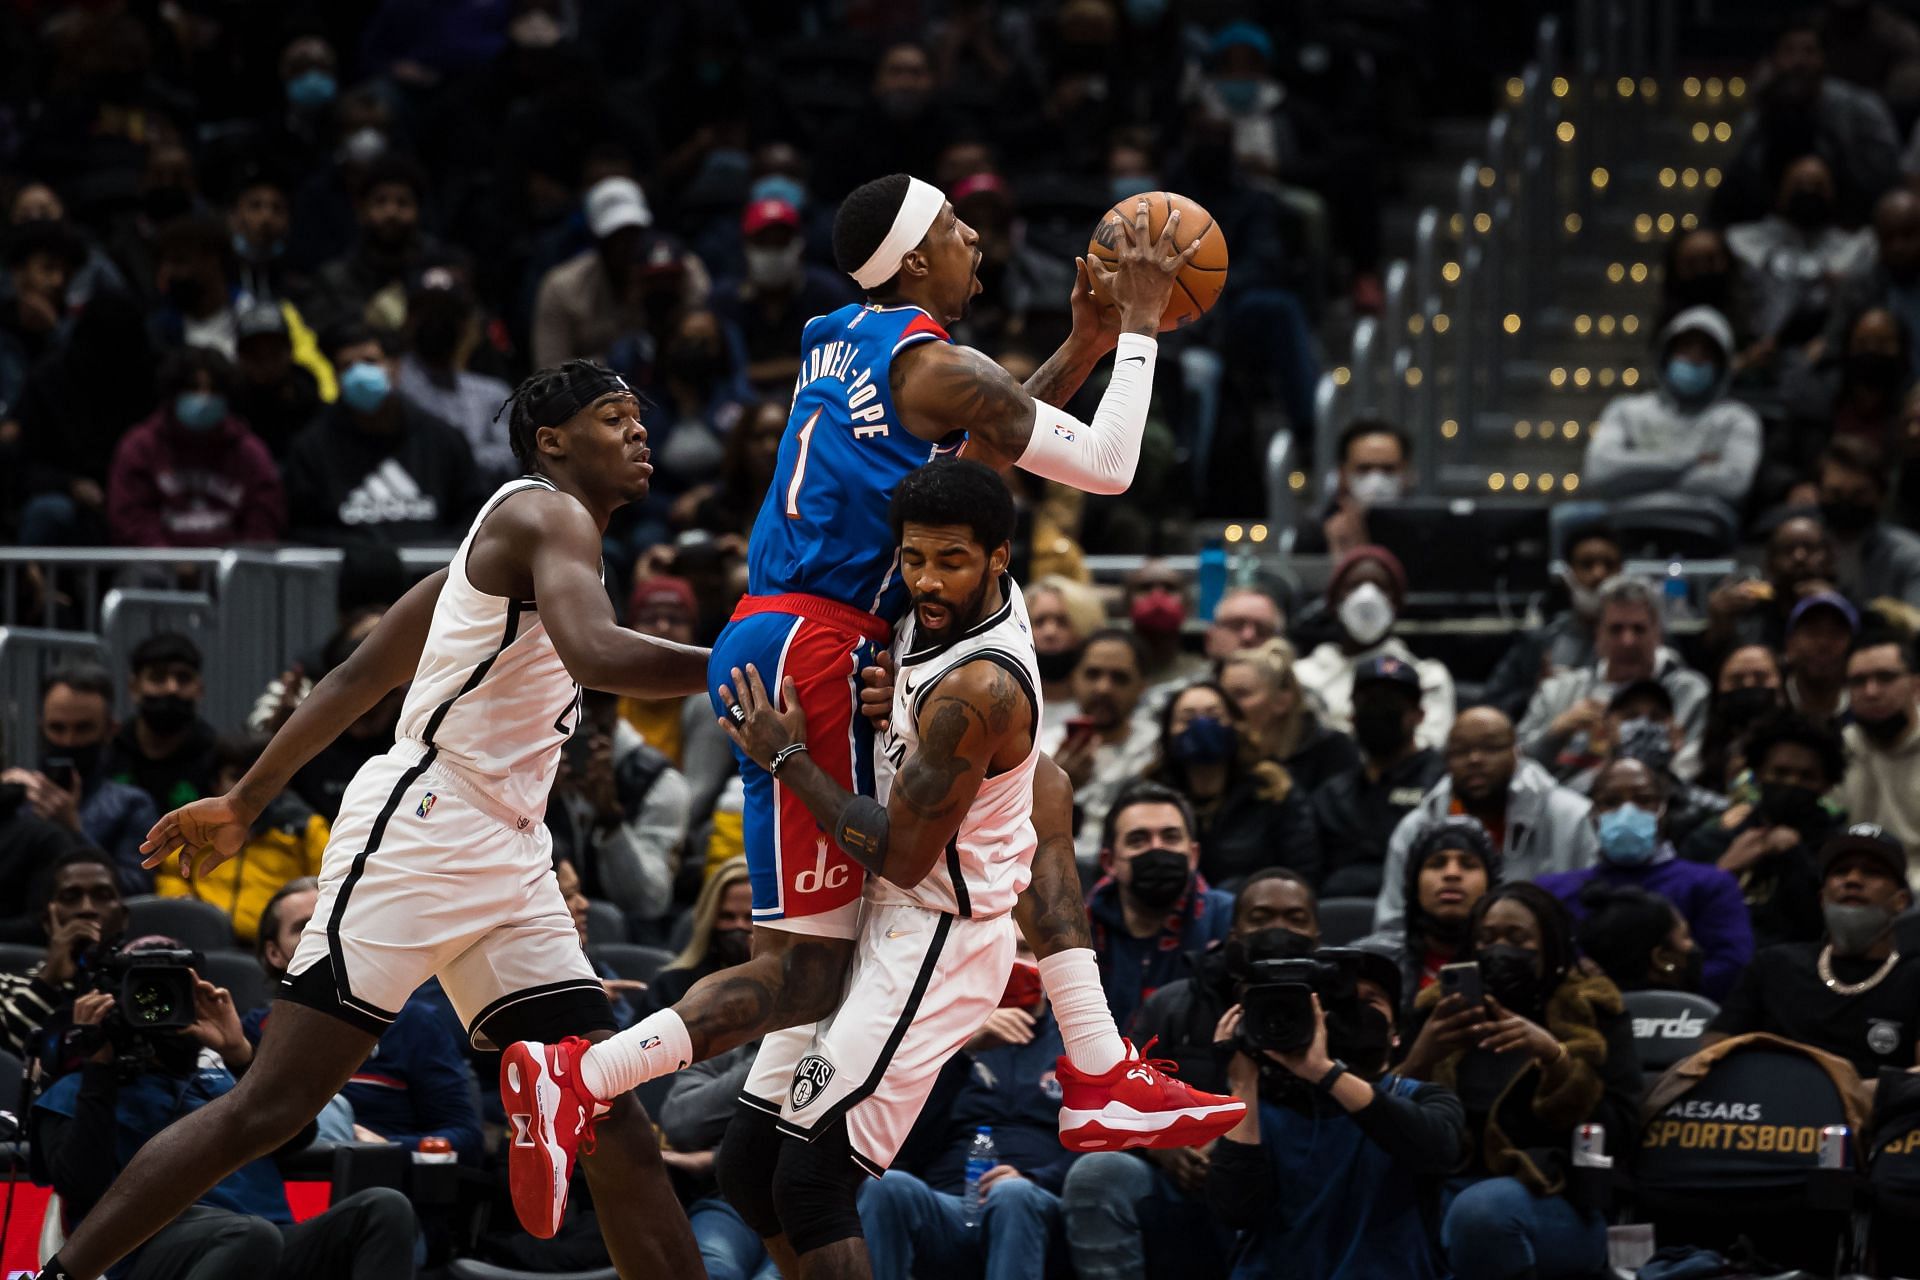 The Washington Wizards will host the Brooklyn Nets on February 10